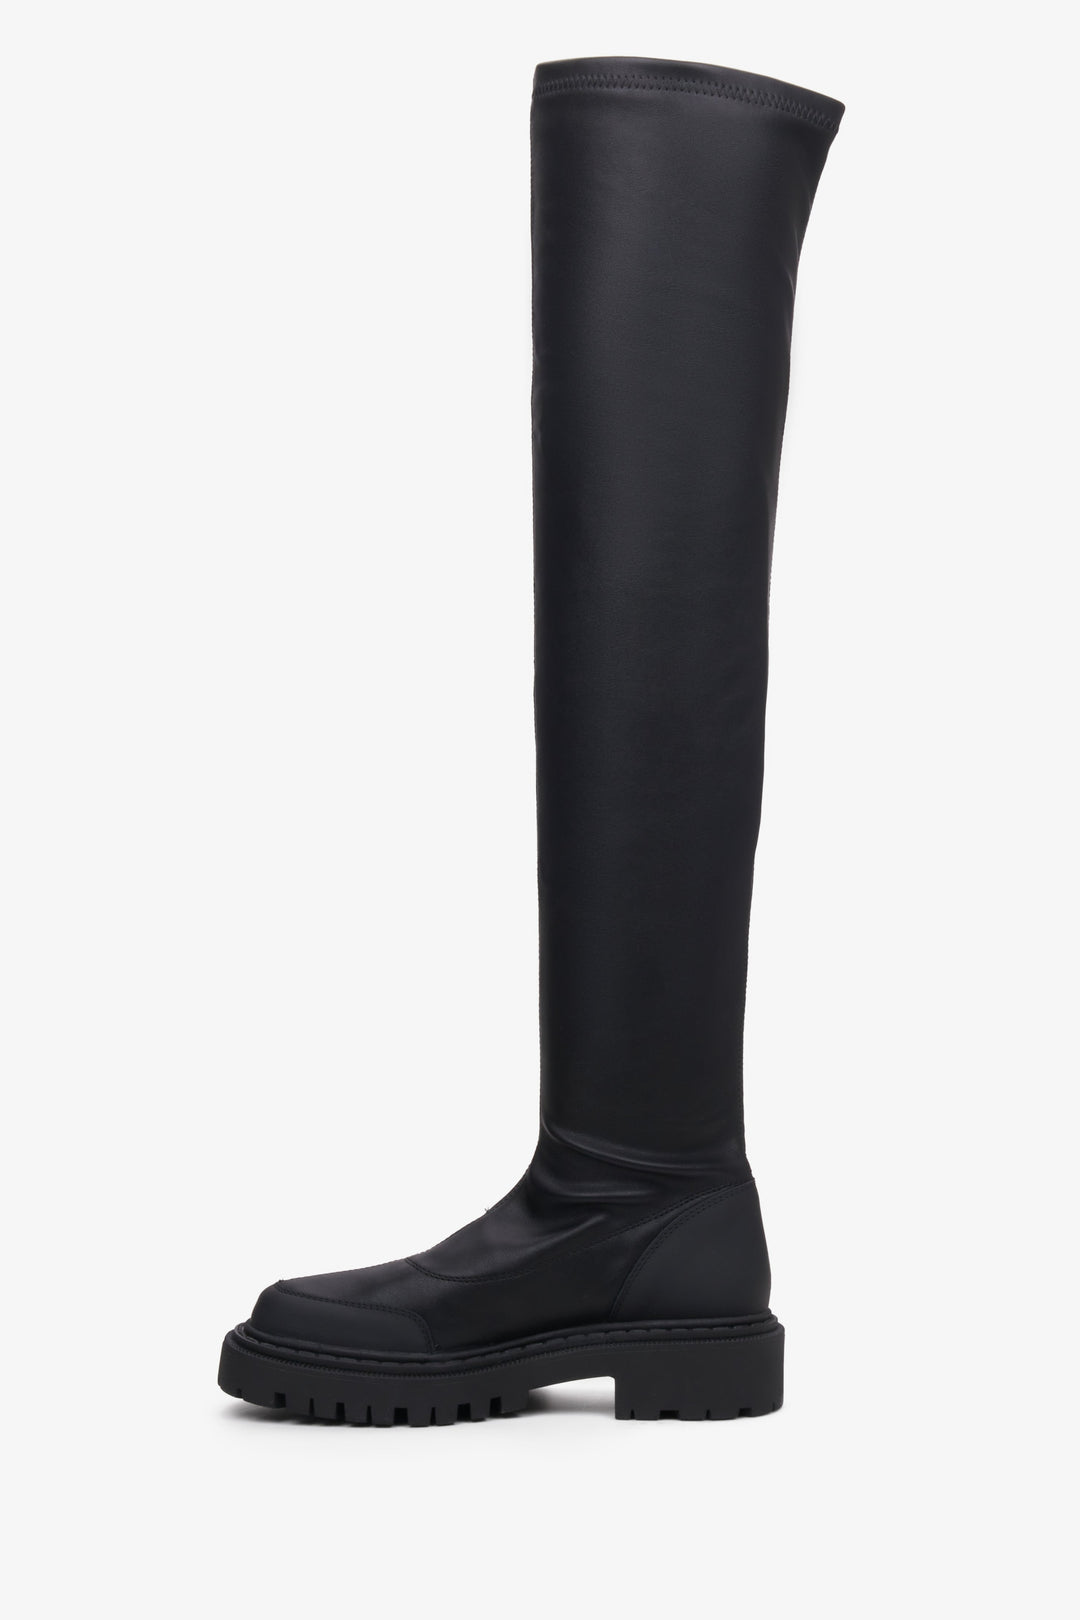 Estro women's black boots with elastic shaft - shoe profile.